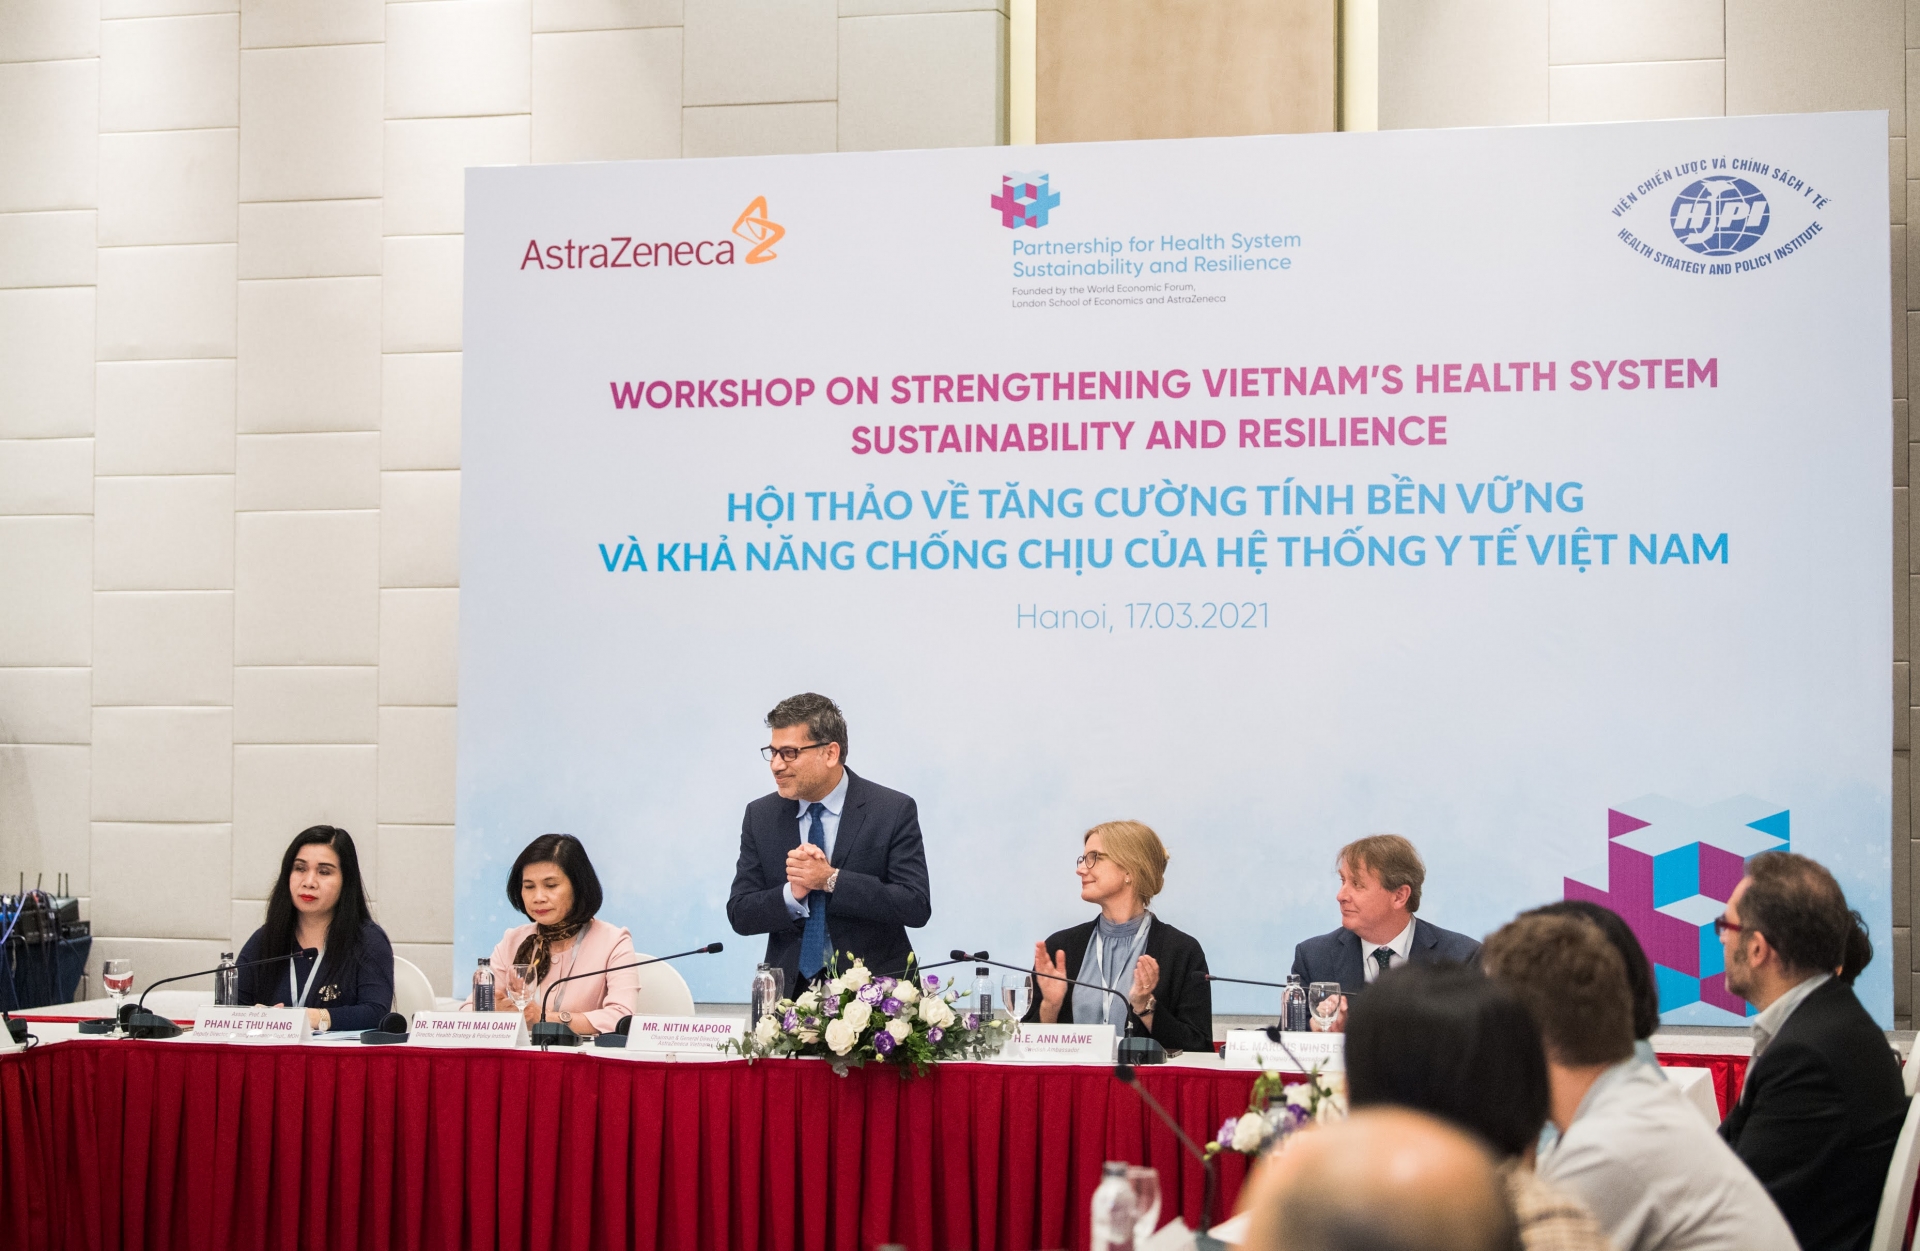 Stakeholders seek to strengthen Vietnam’s health system